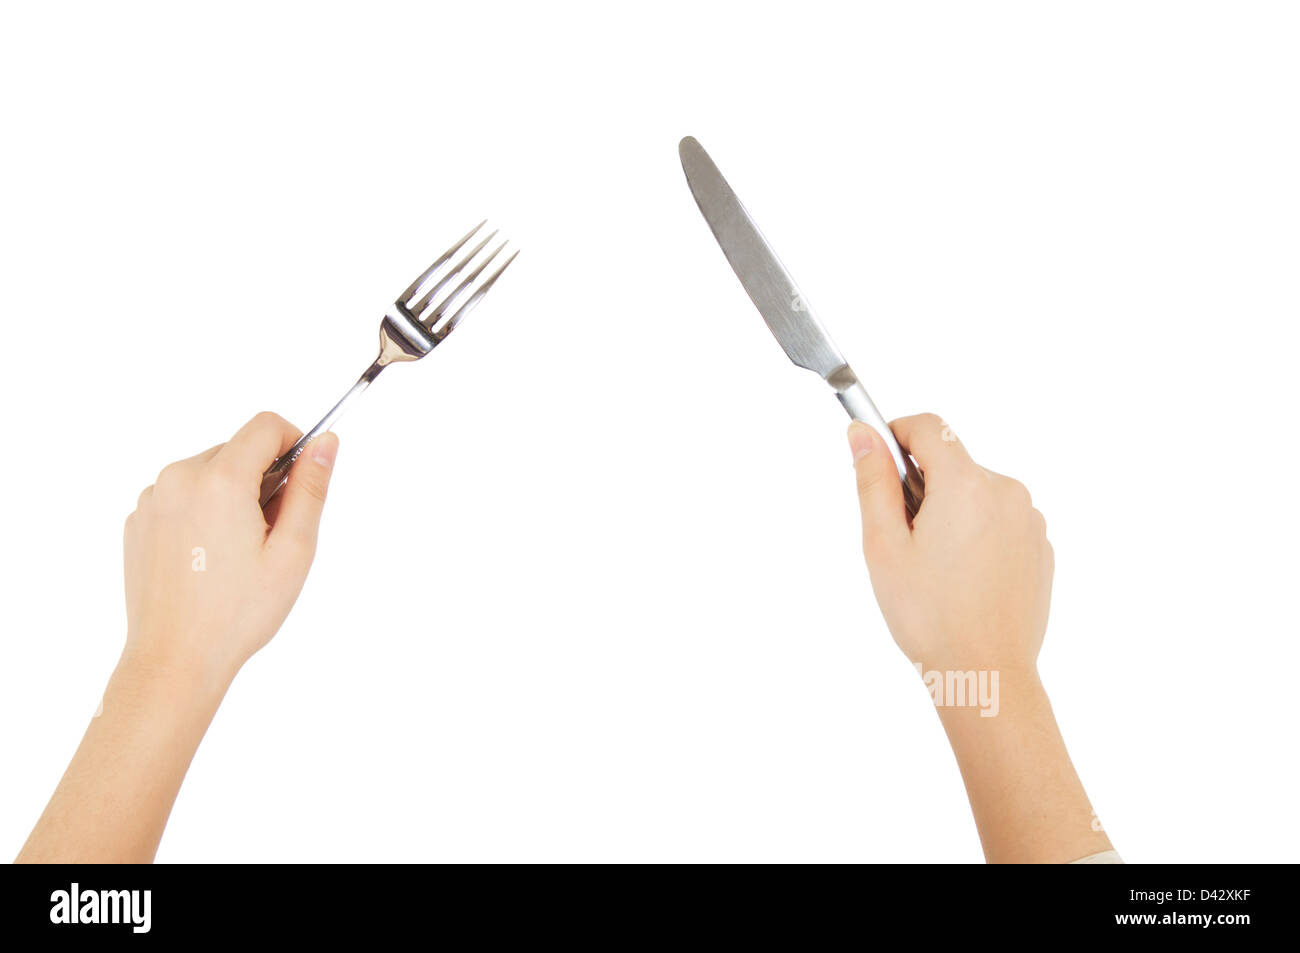 assistance palm knife fork Stock Photo